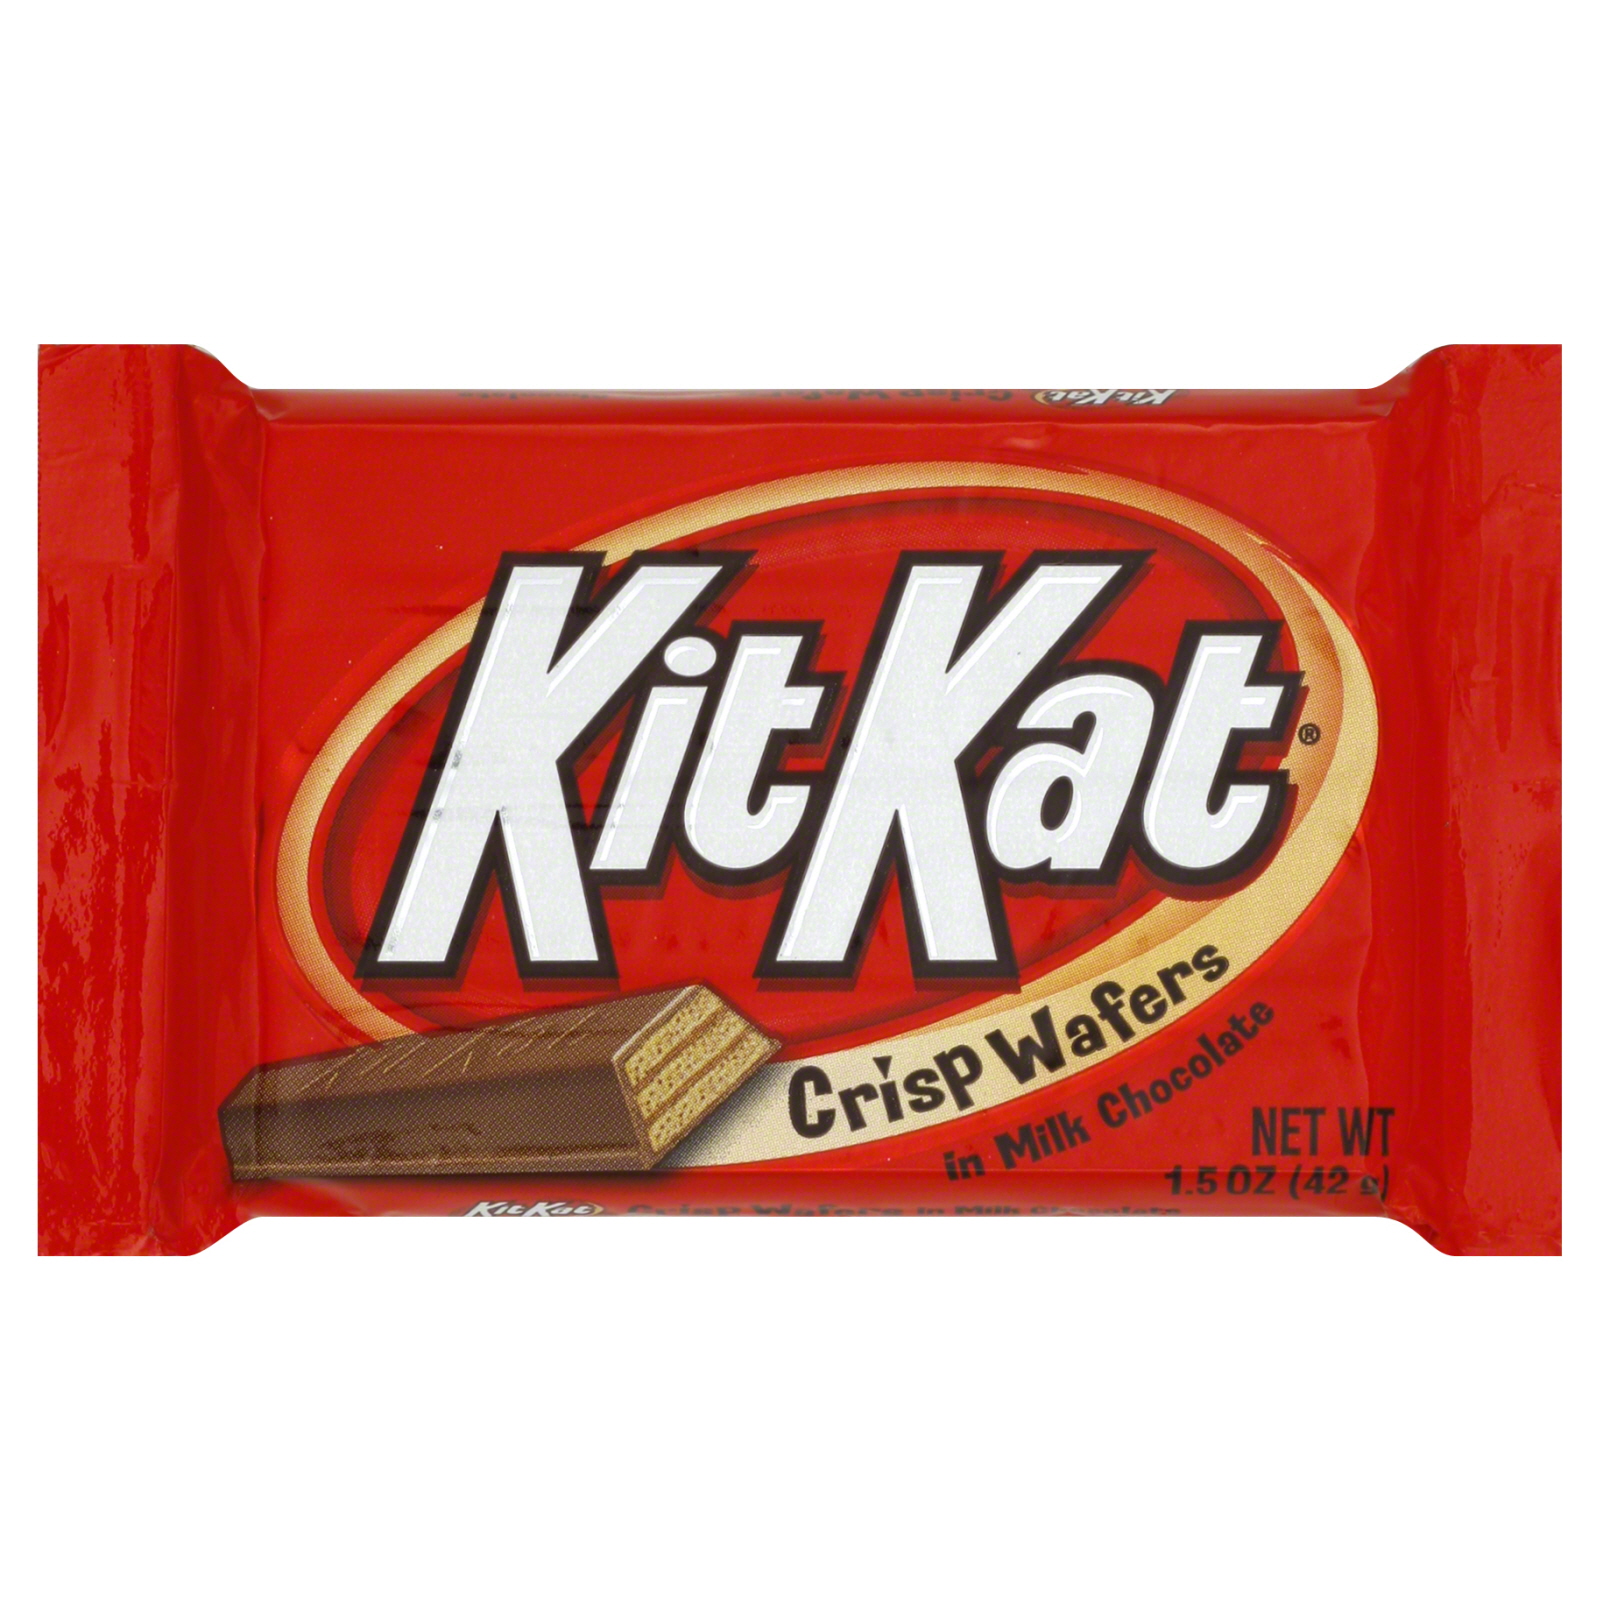 Kit Kat Crisp Wafers, in Milk Chocolate, 1.5 oz (42 g)